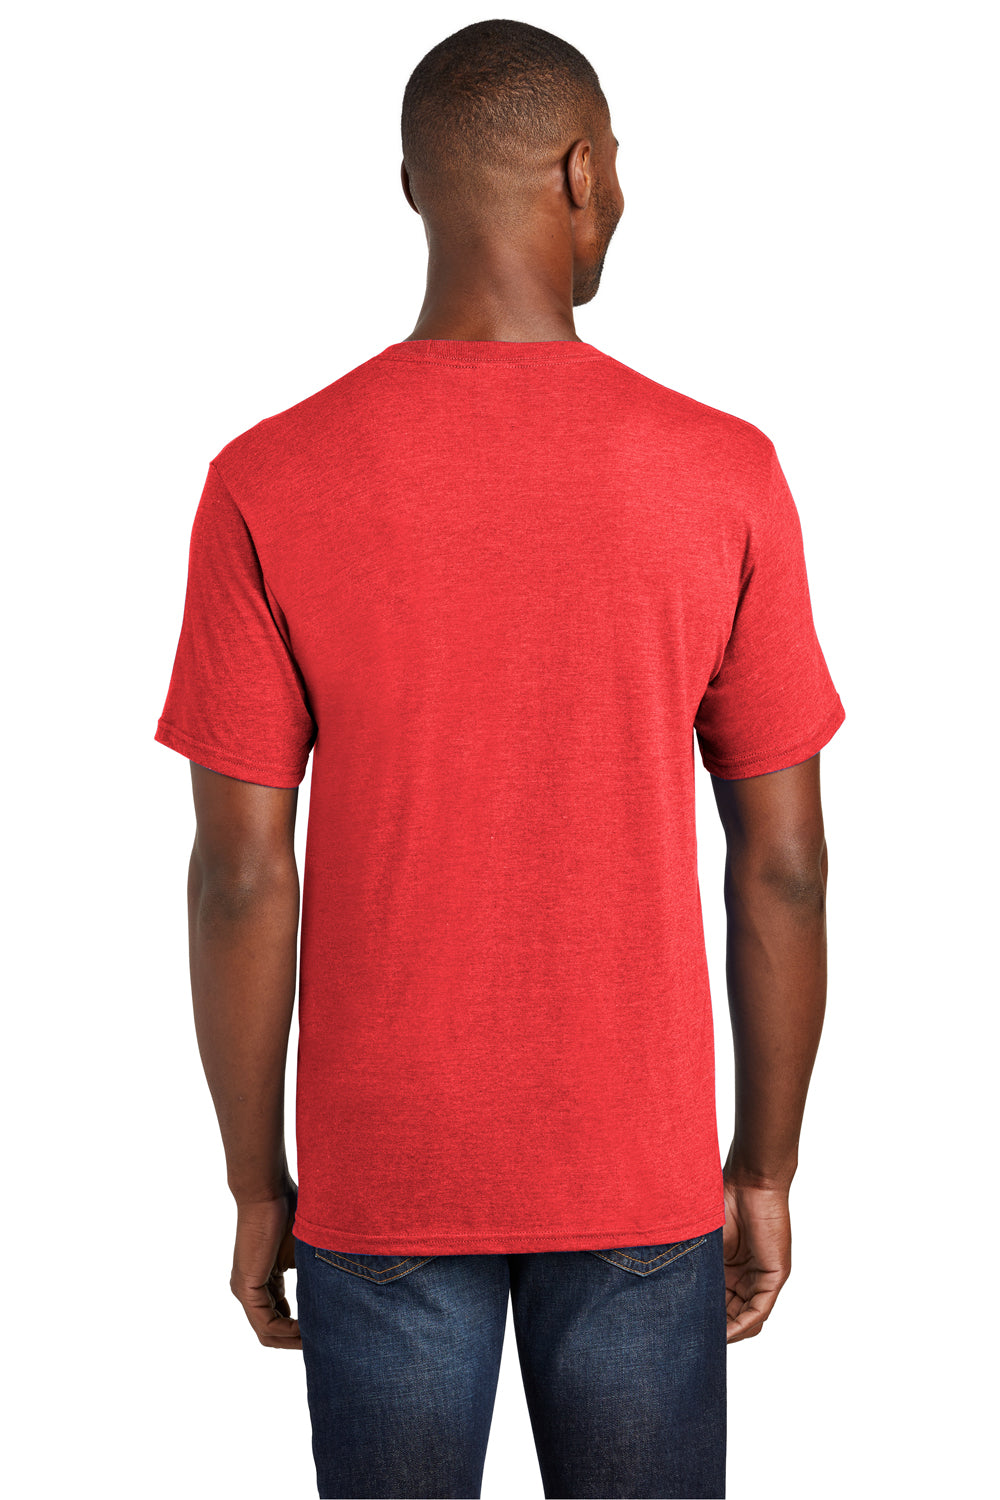 Port & Company PC455 Mens Fan Favorite Short Sleeve Crewneck T-Shirt Heather Red Back